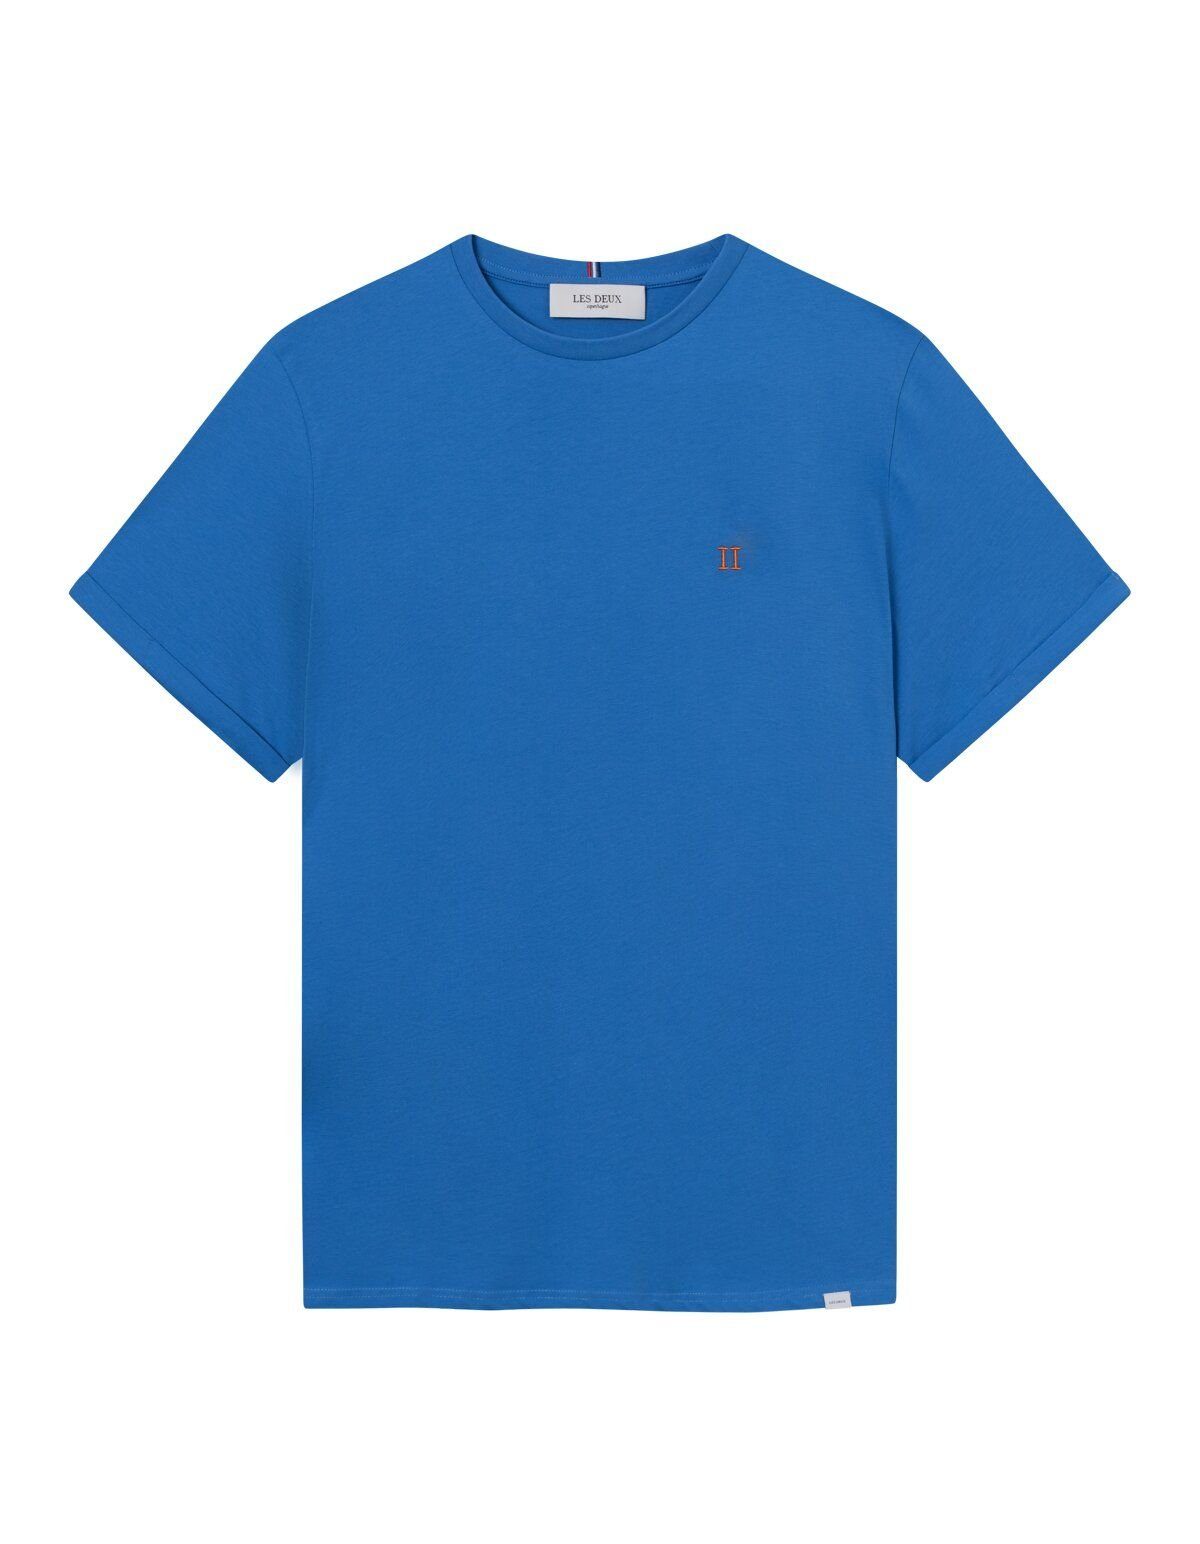 Les T-Shirt Bauumwolle, atmungsaktiv Blue/o Deux reine 471730-Palace